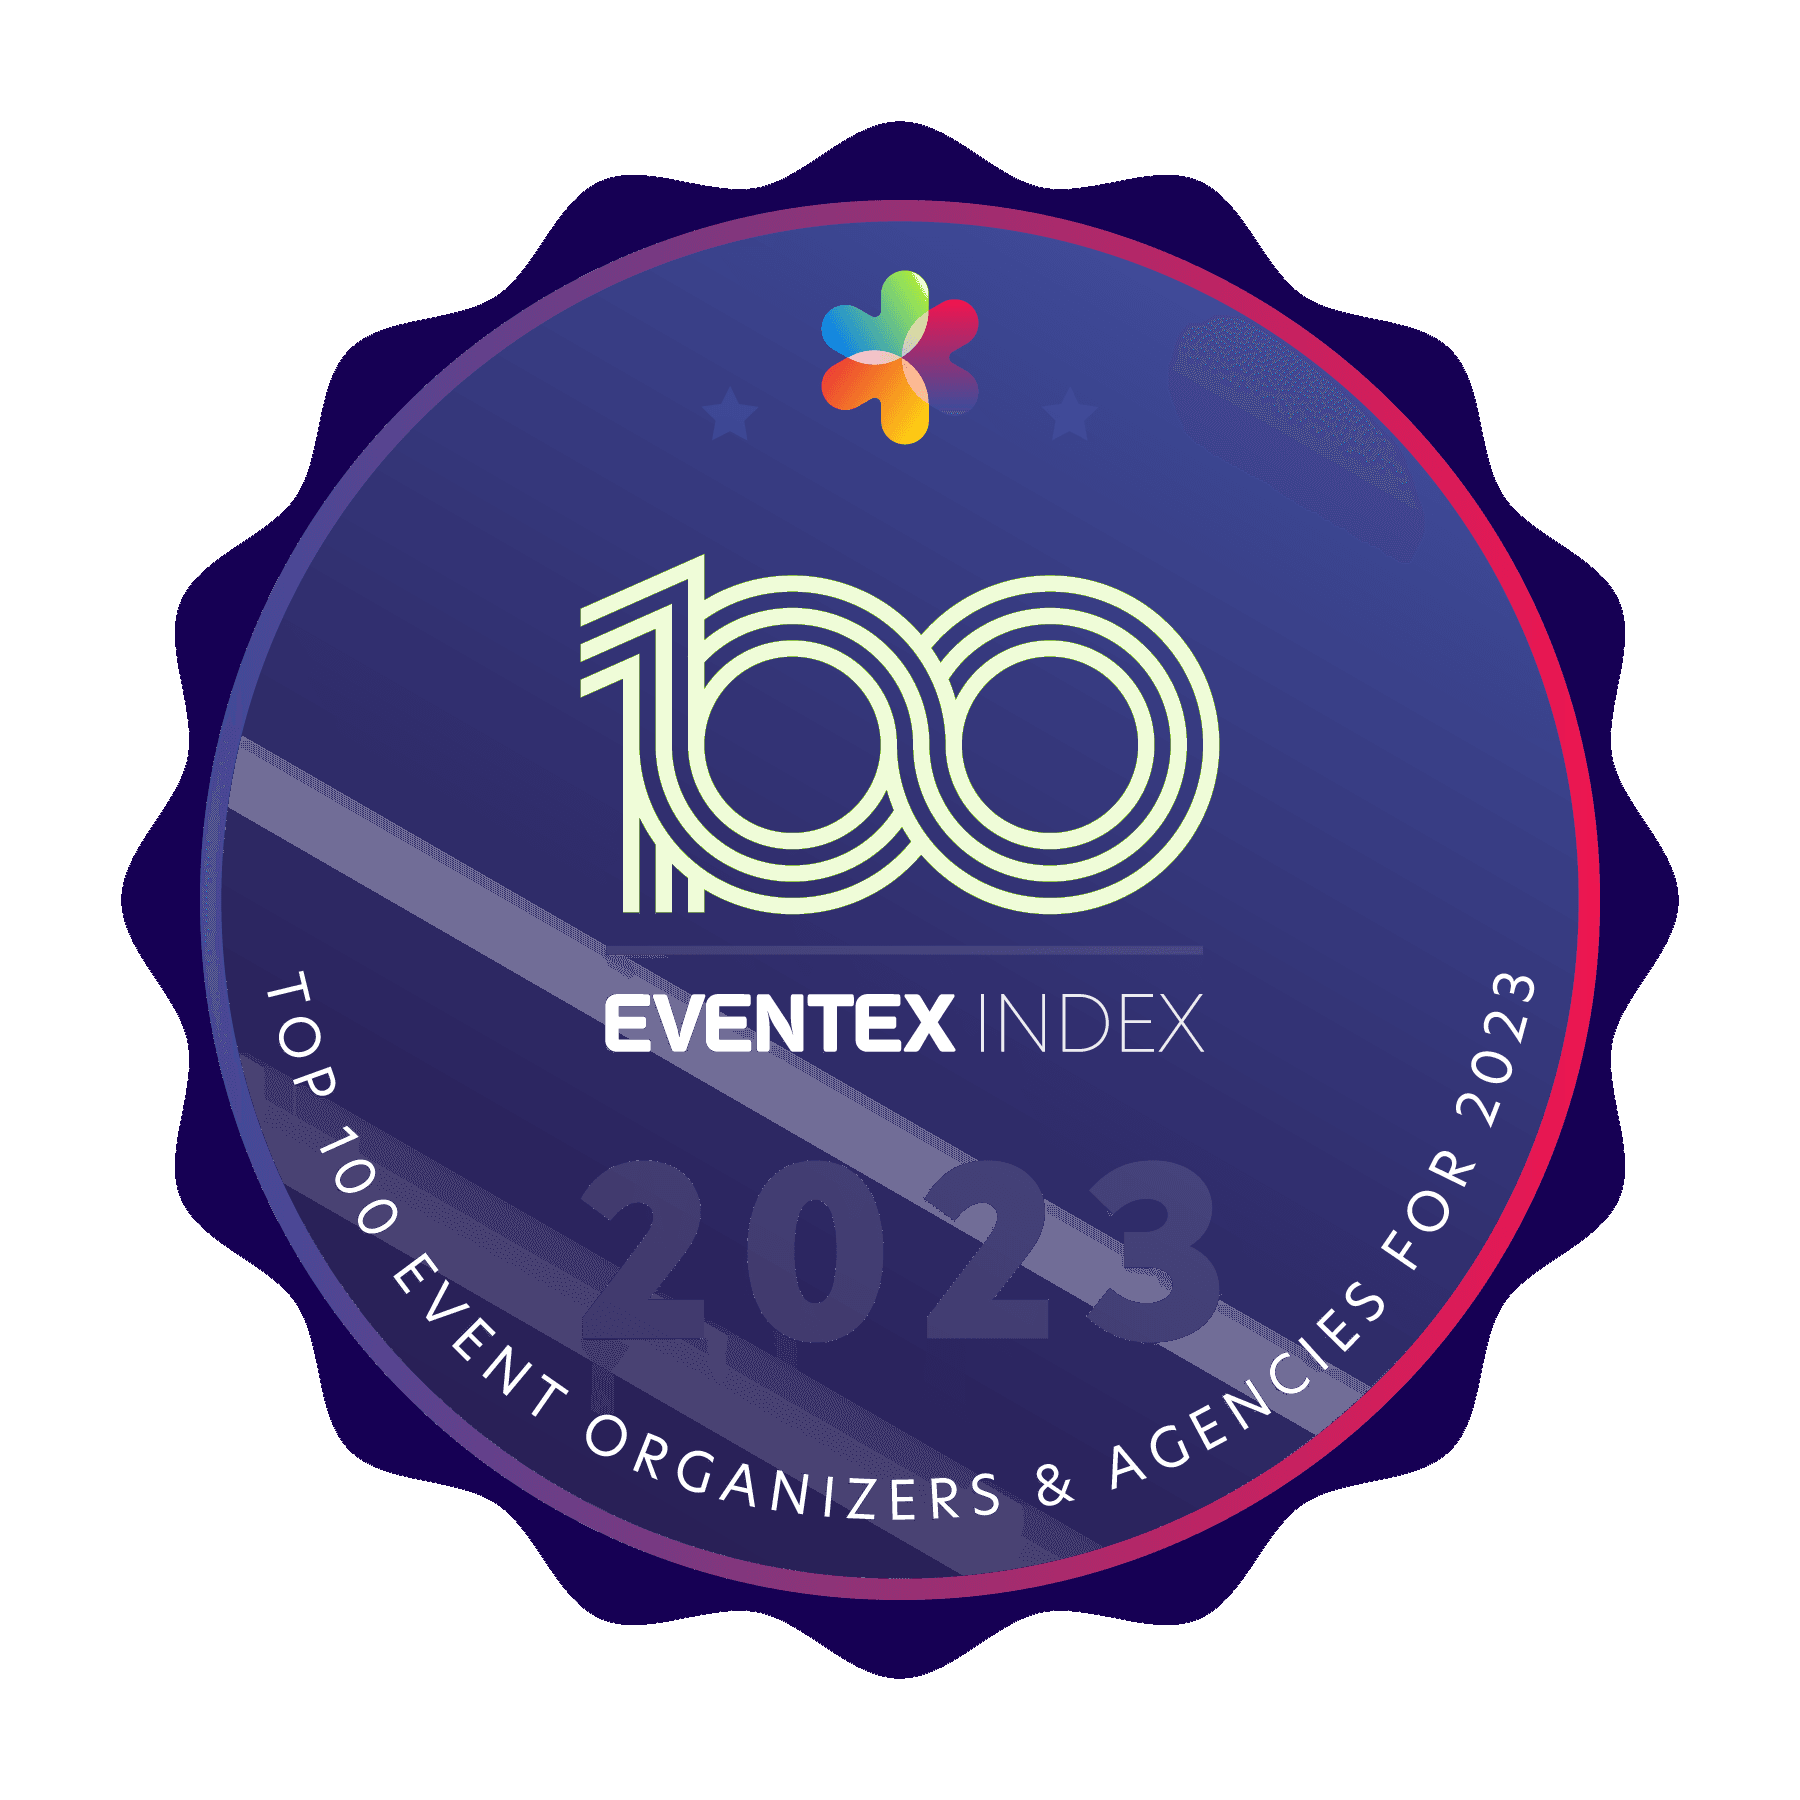 2023 : Top 100 event organizers & agencies